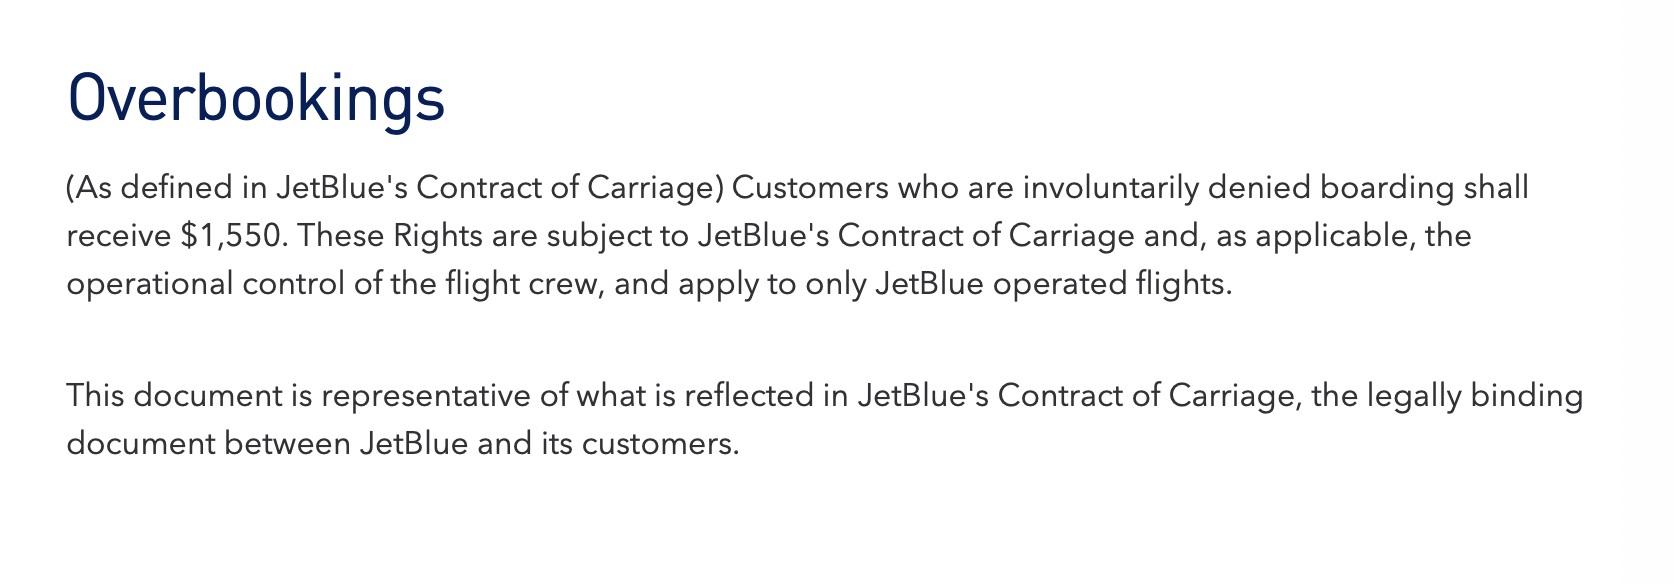 JetBlue обещает пассажиру, который не попал на рейс из⁠-⁠за овербукинга, 1550 $